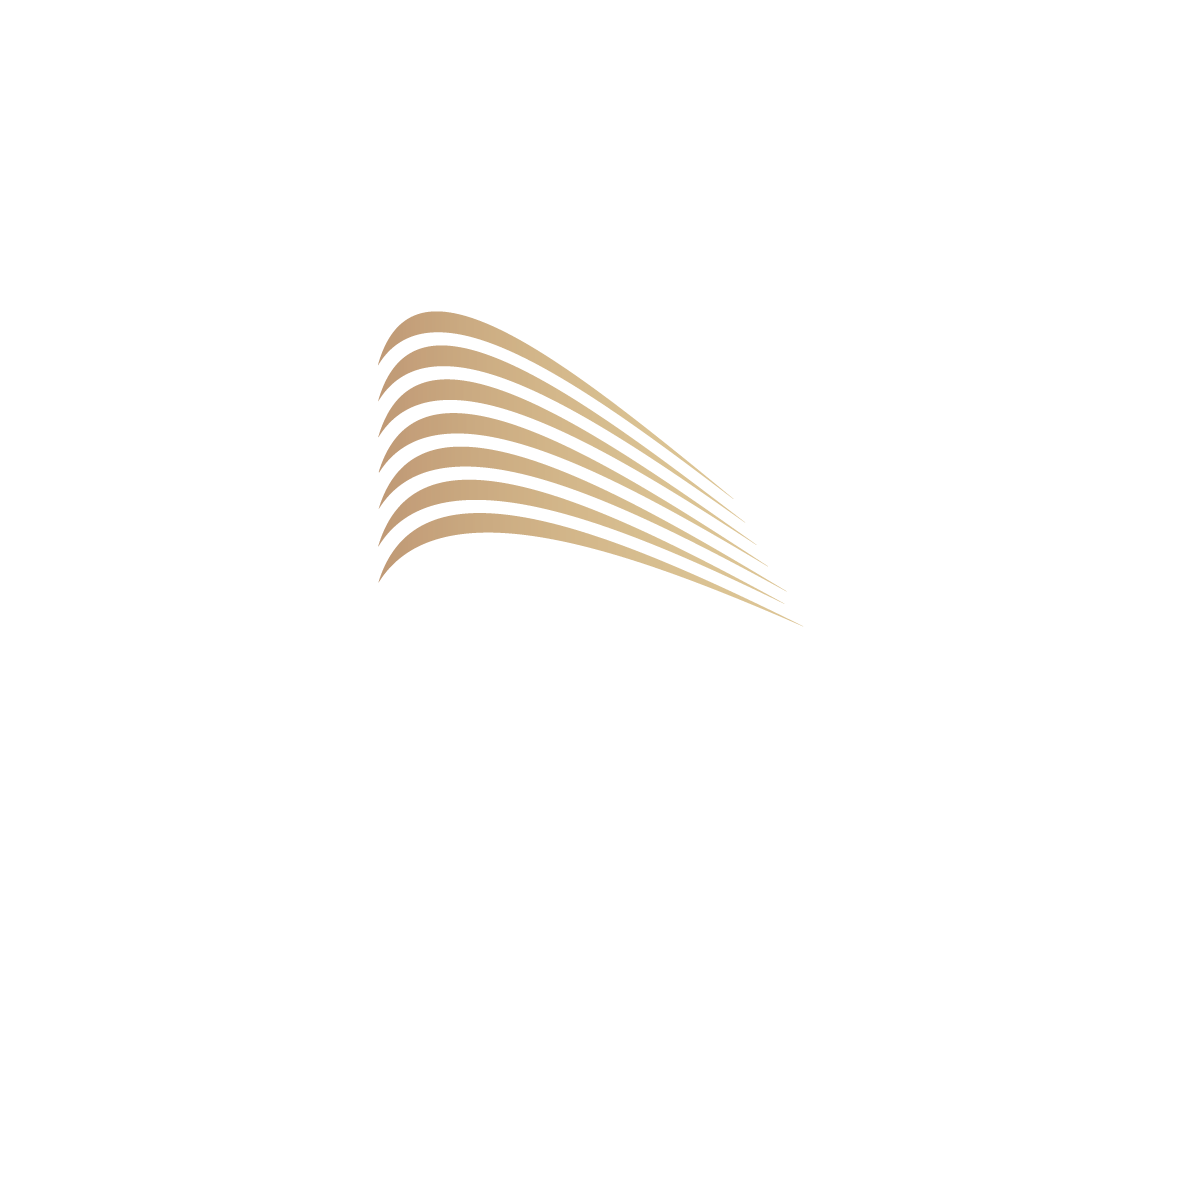 Plaza Design